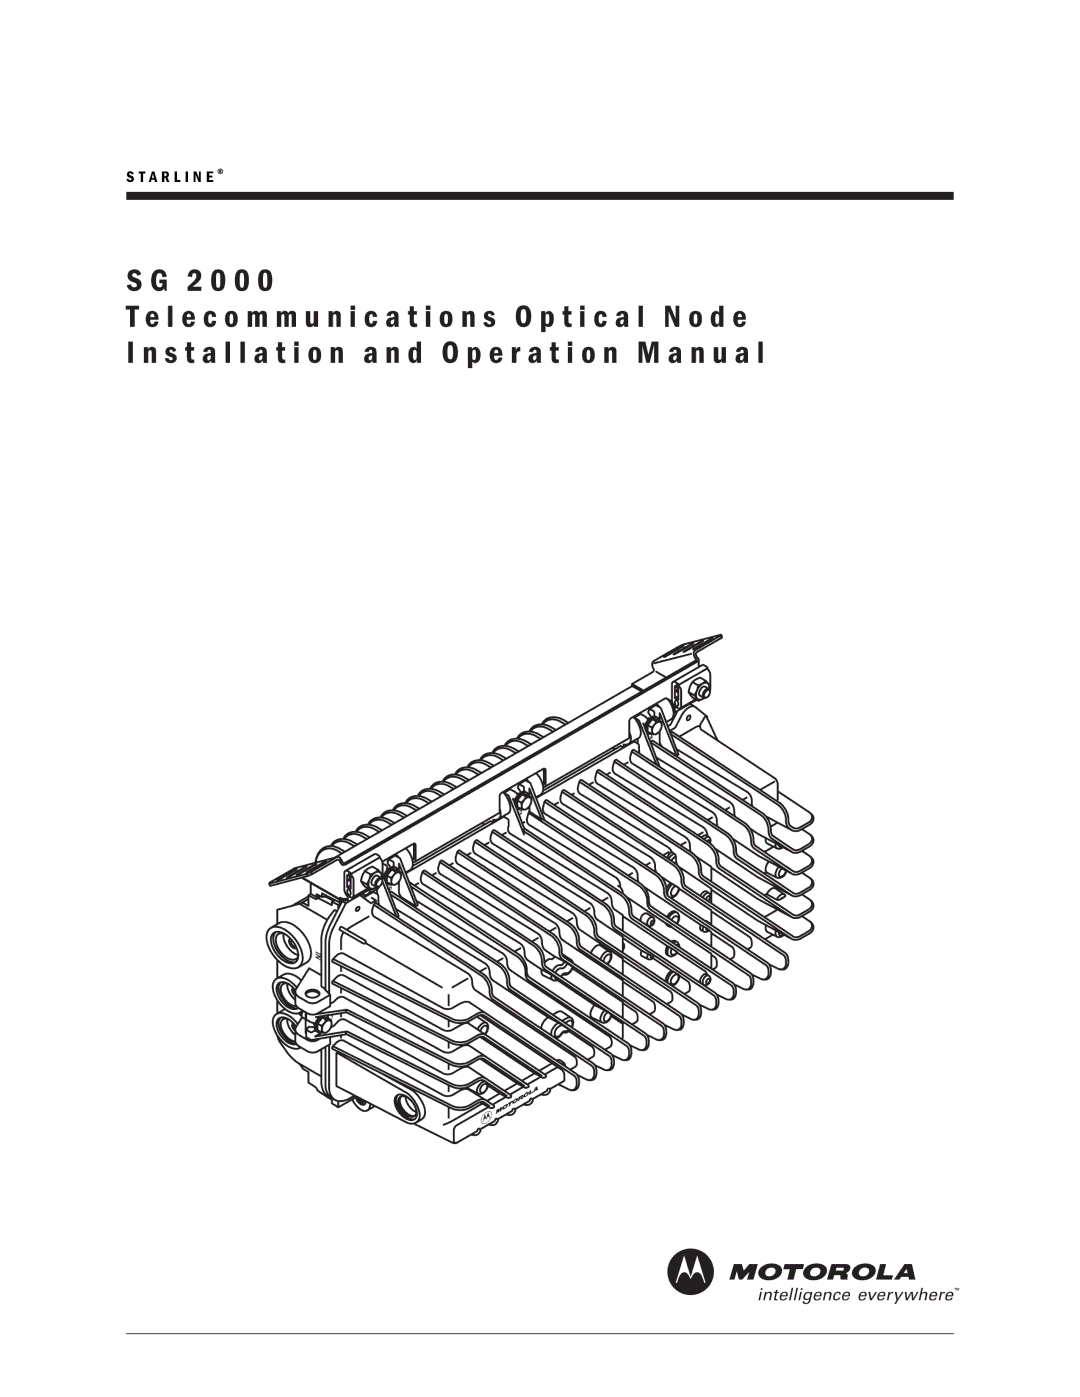 Motorola SG 2000 operation manual A R L I N E 